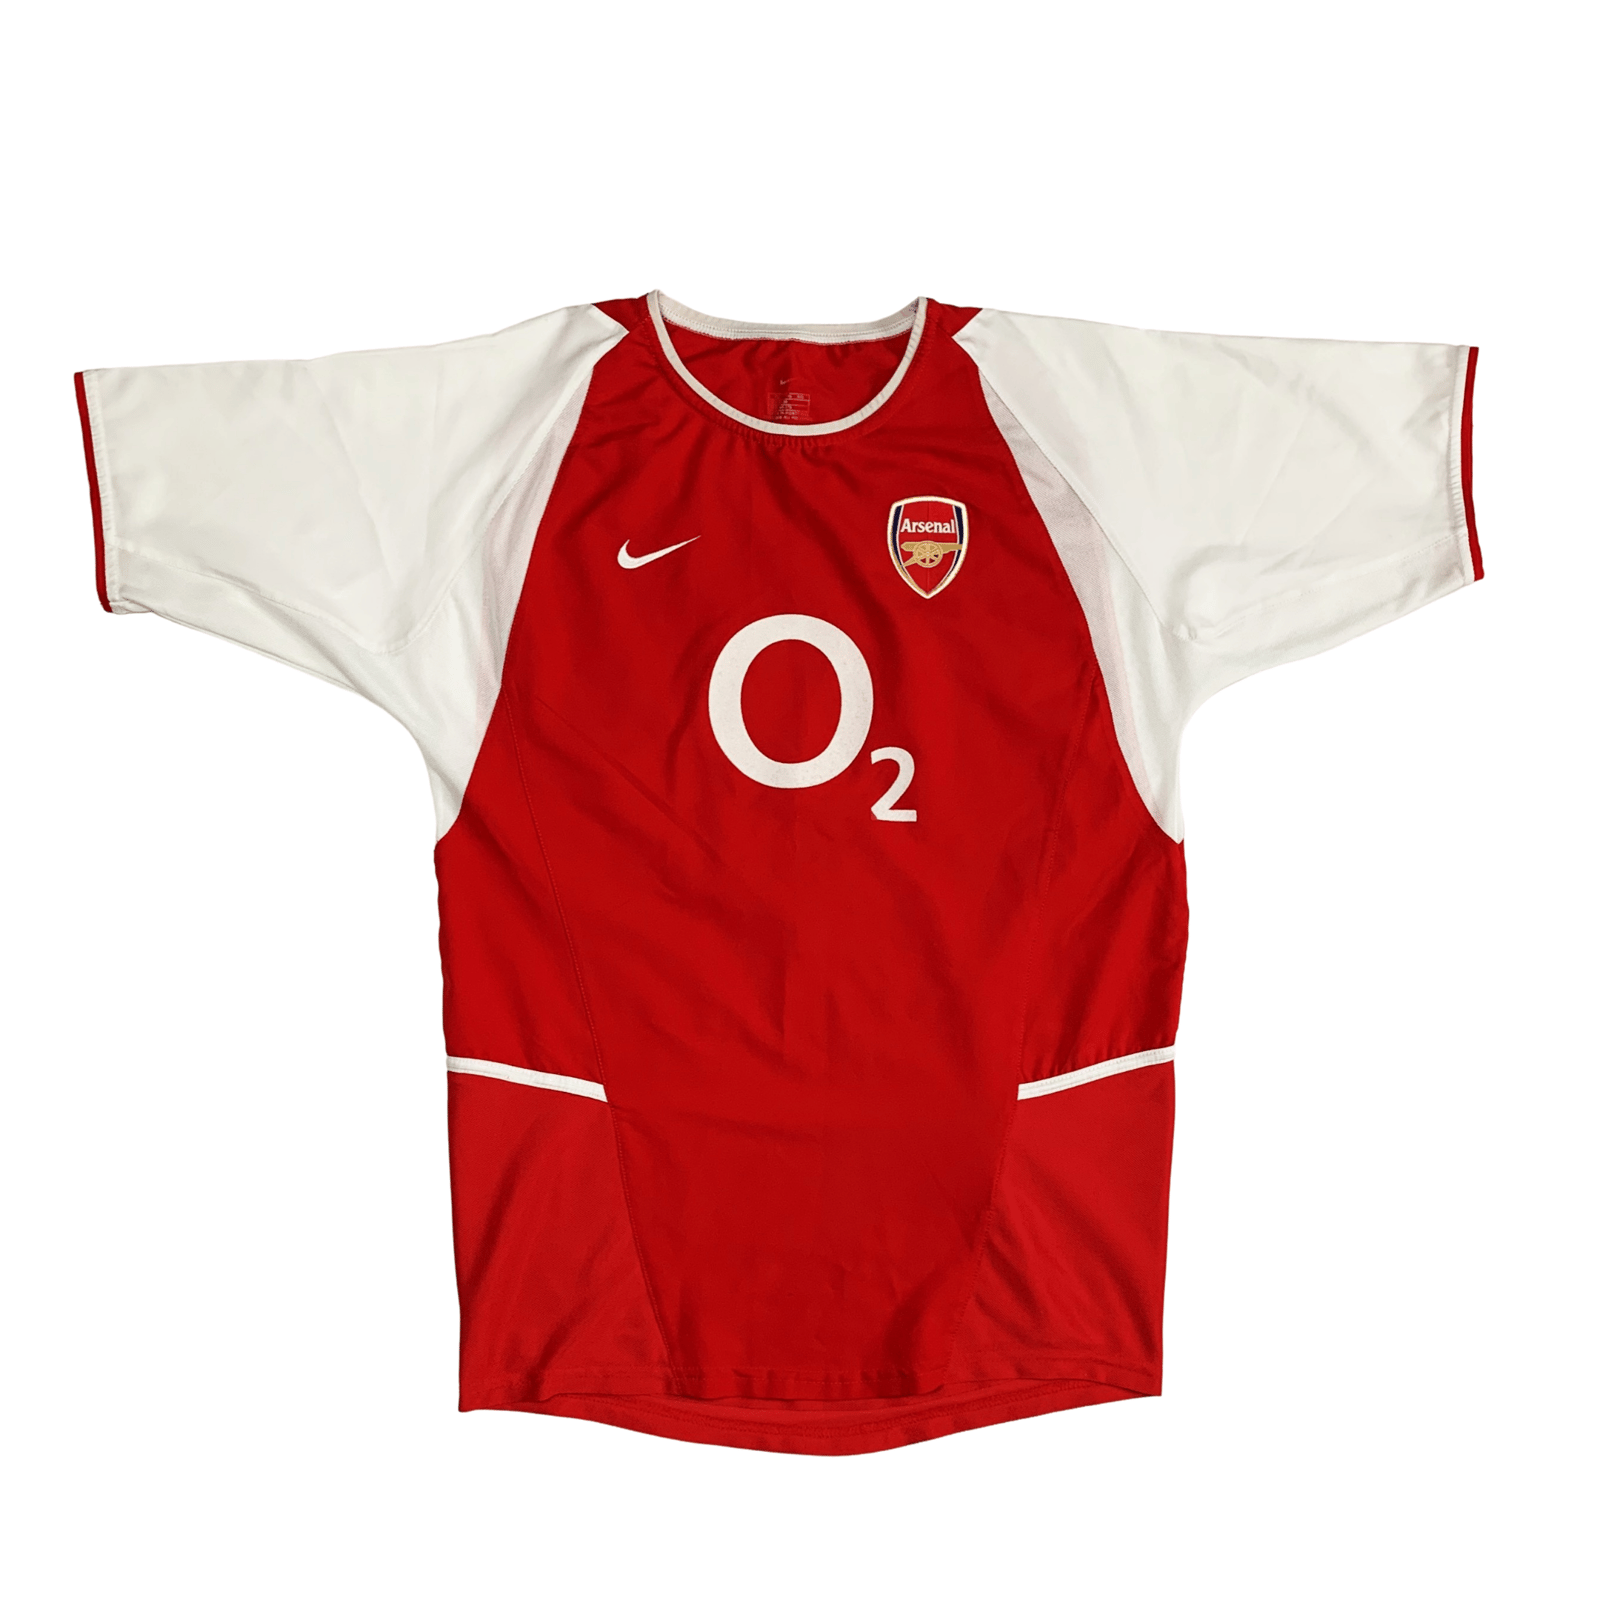 arsenal shirt 2002